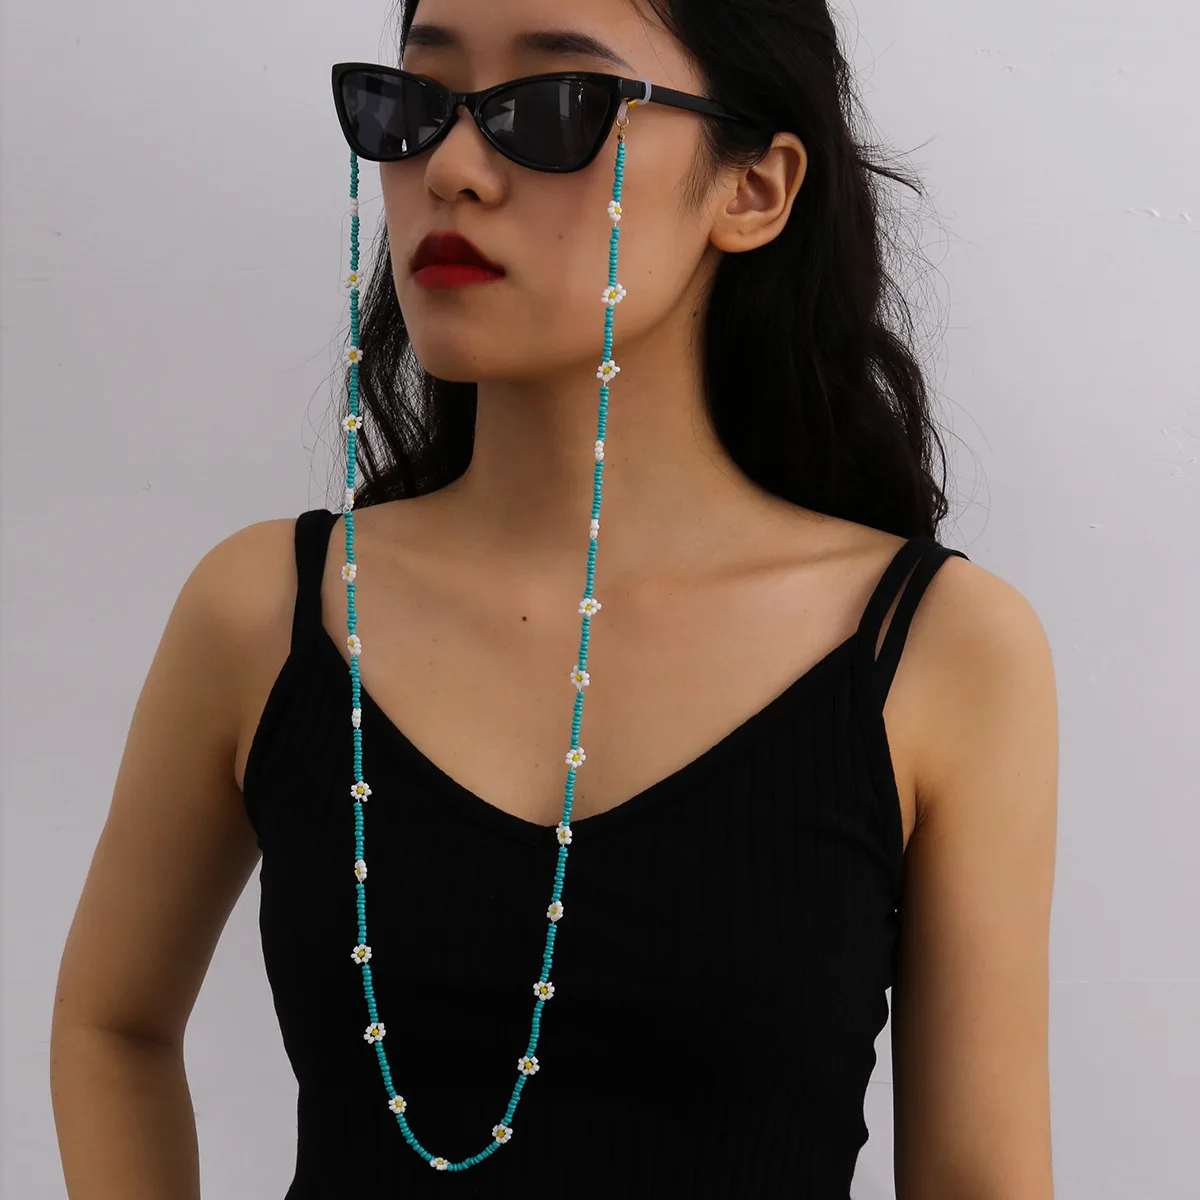 LIKGREAT 2 Pcs Eyeglass Sunglass Chain for Women Beaded Reading Glasses Cord 